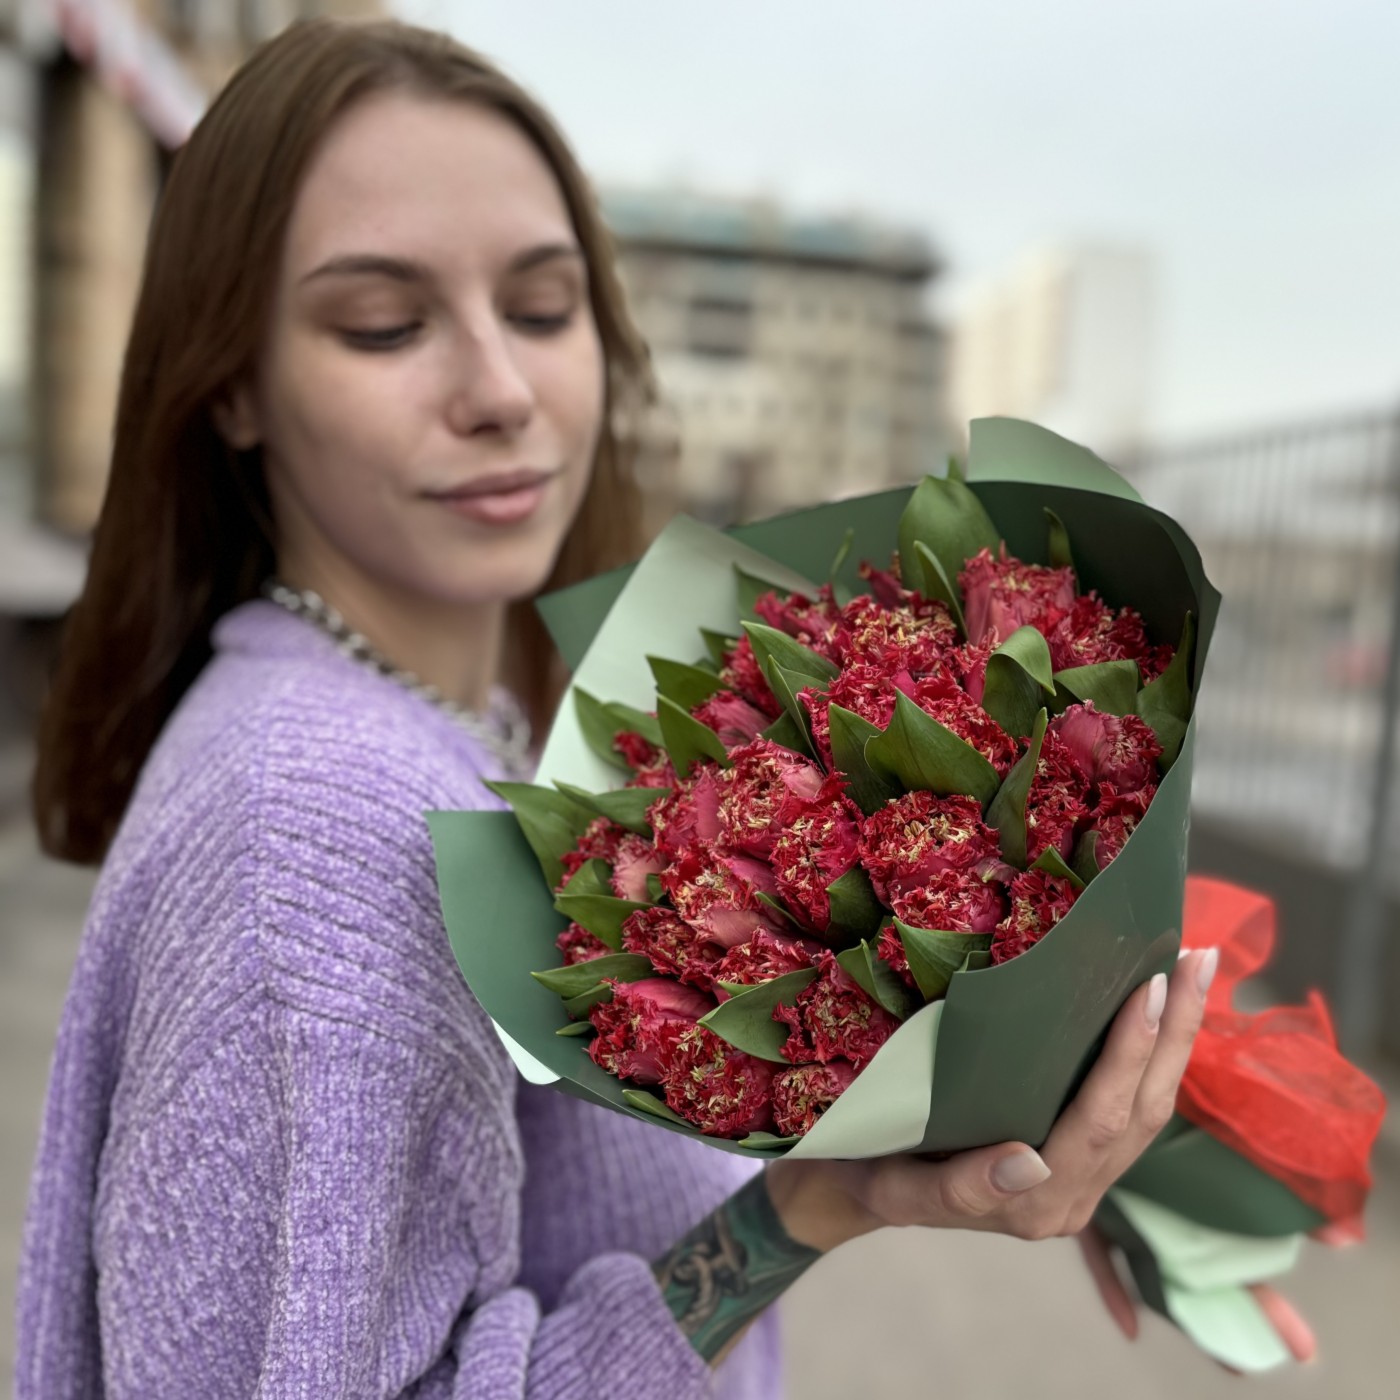 35 махровых красных тюльпанов Ля мур